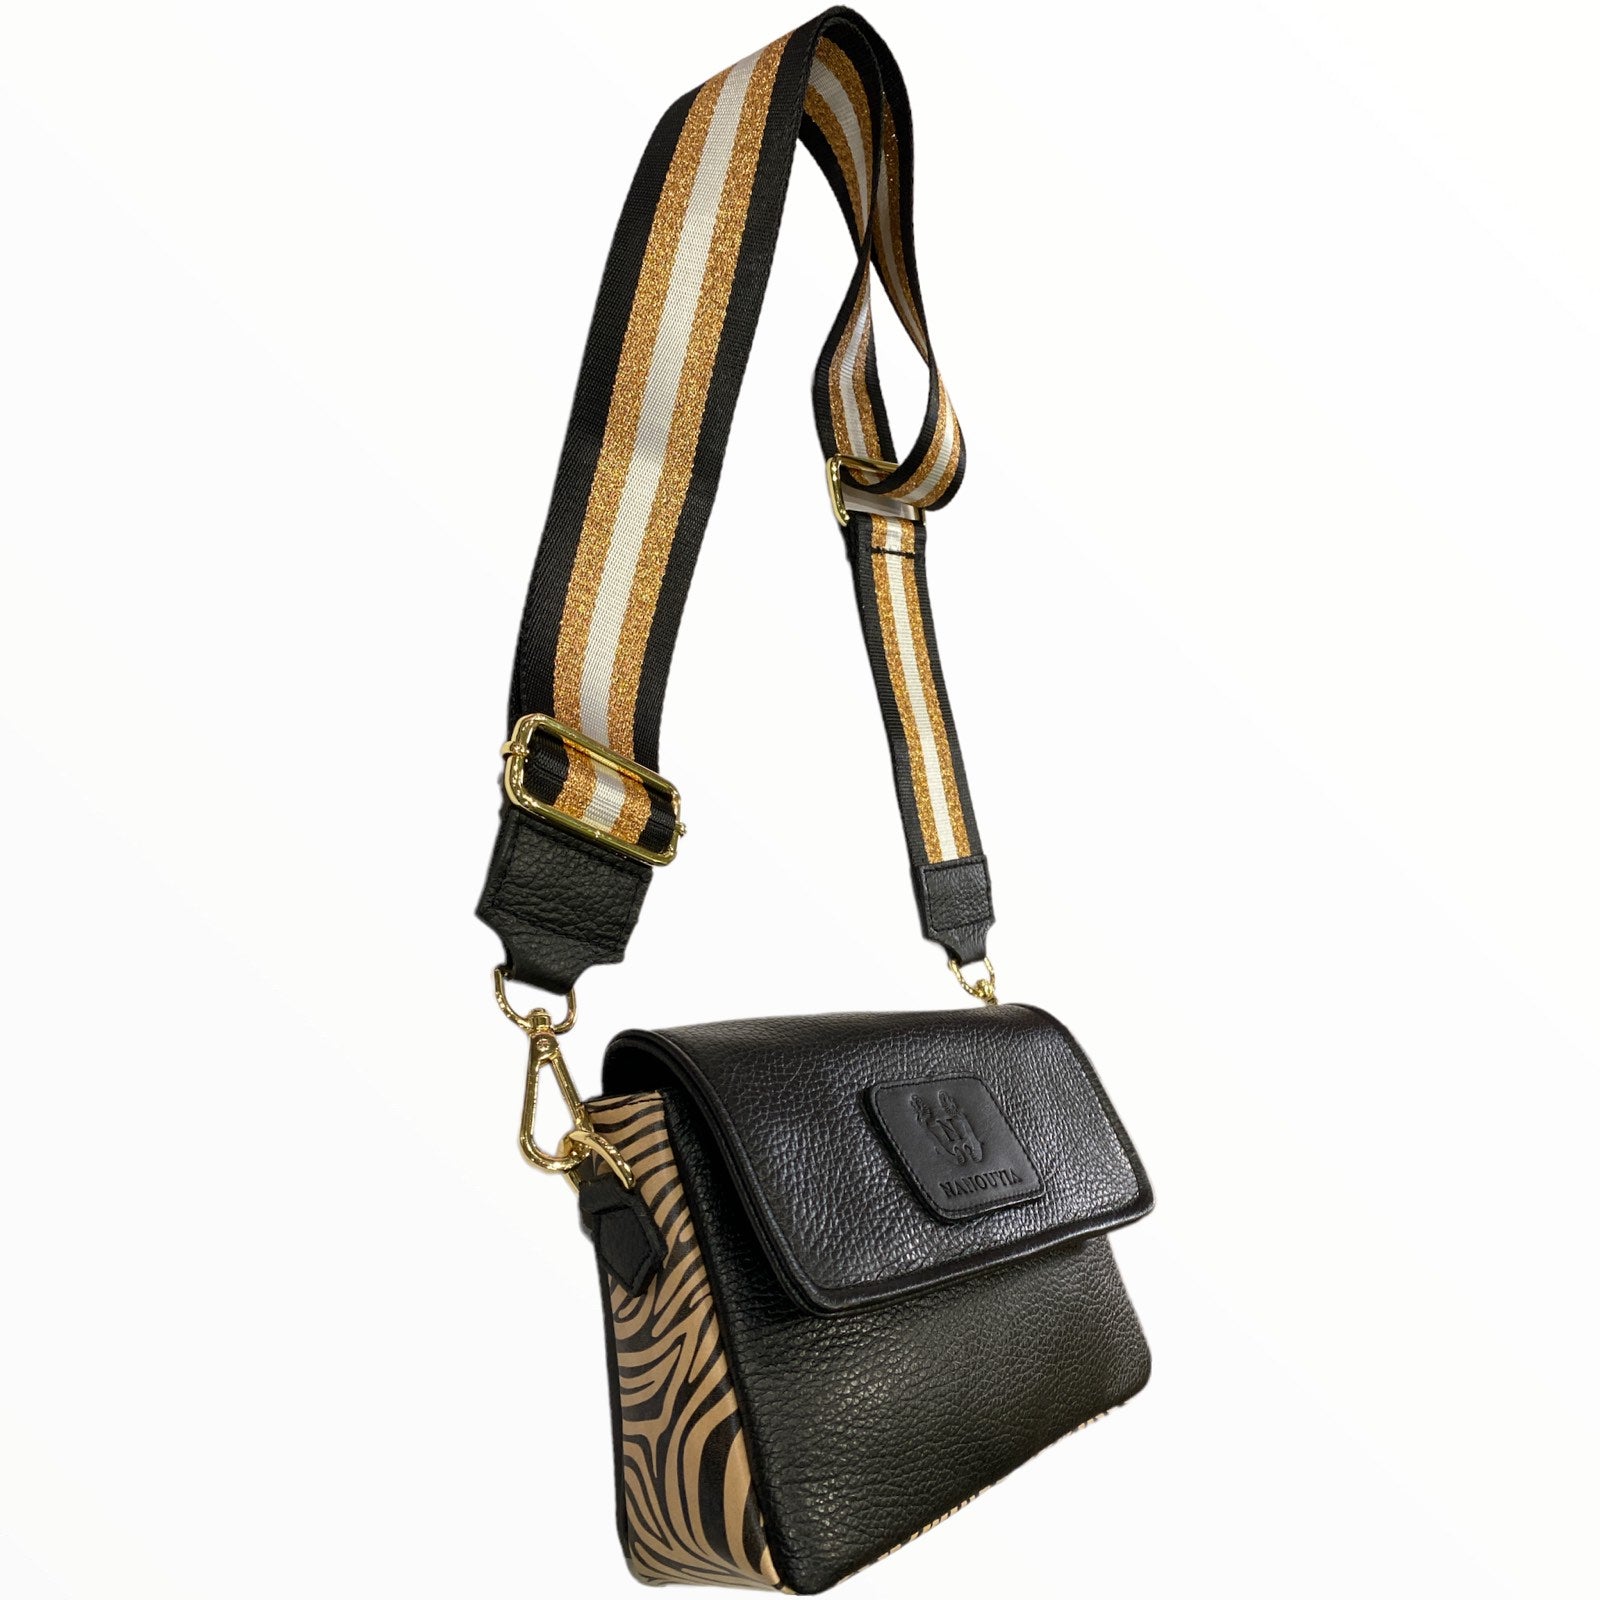 Mandy mini. Black-beige leather limited edition bag